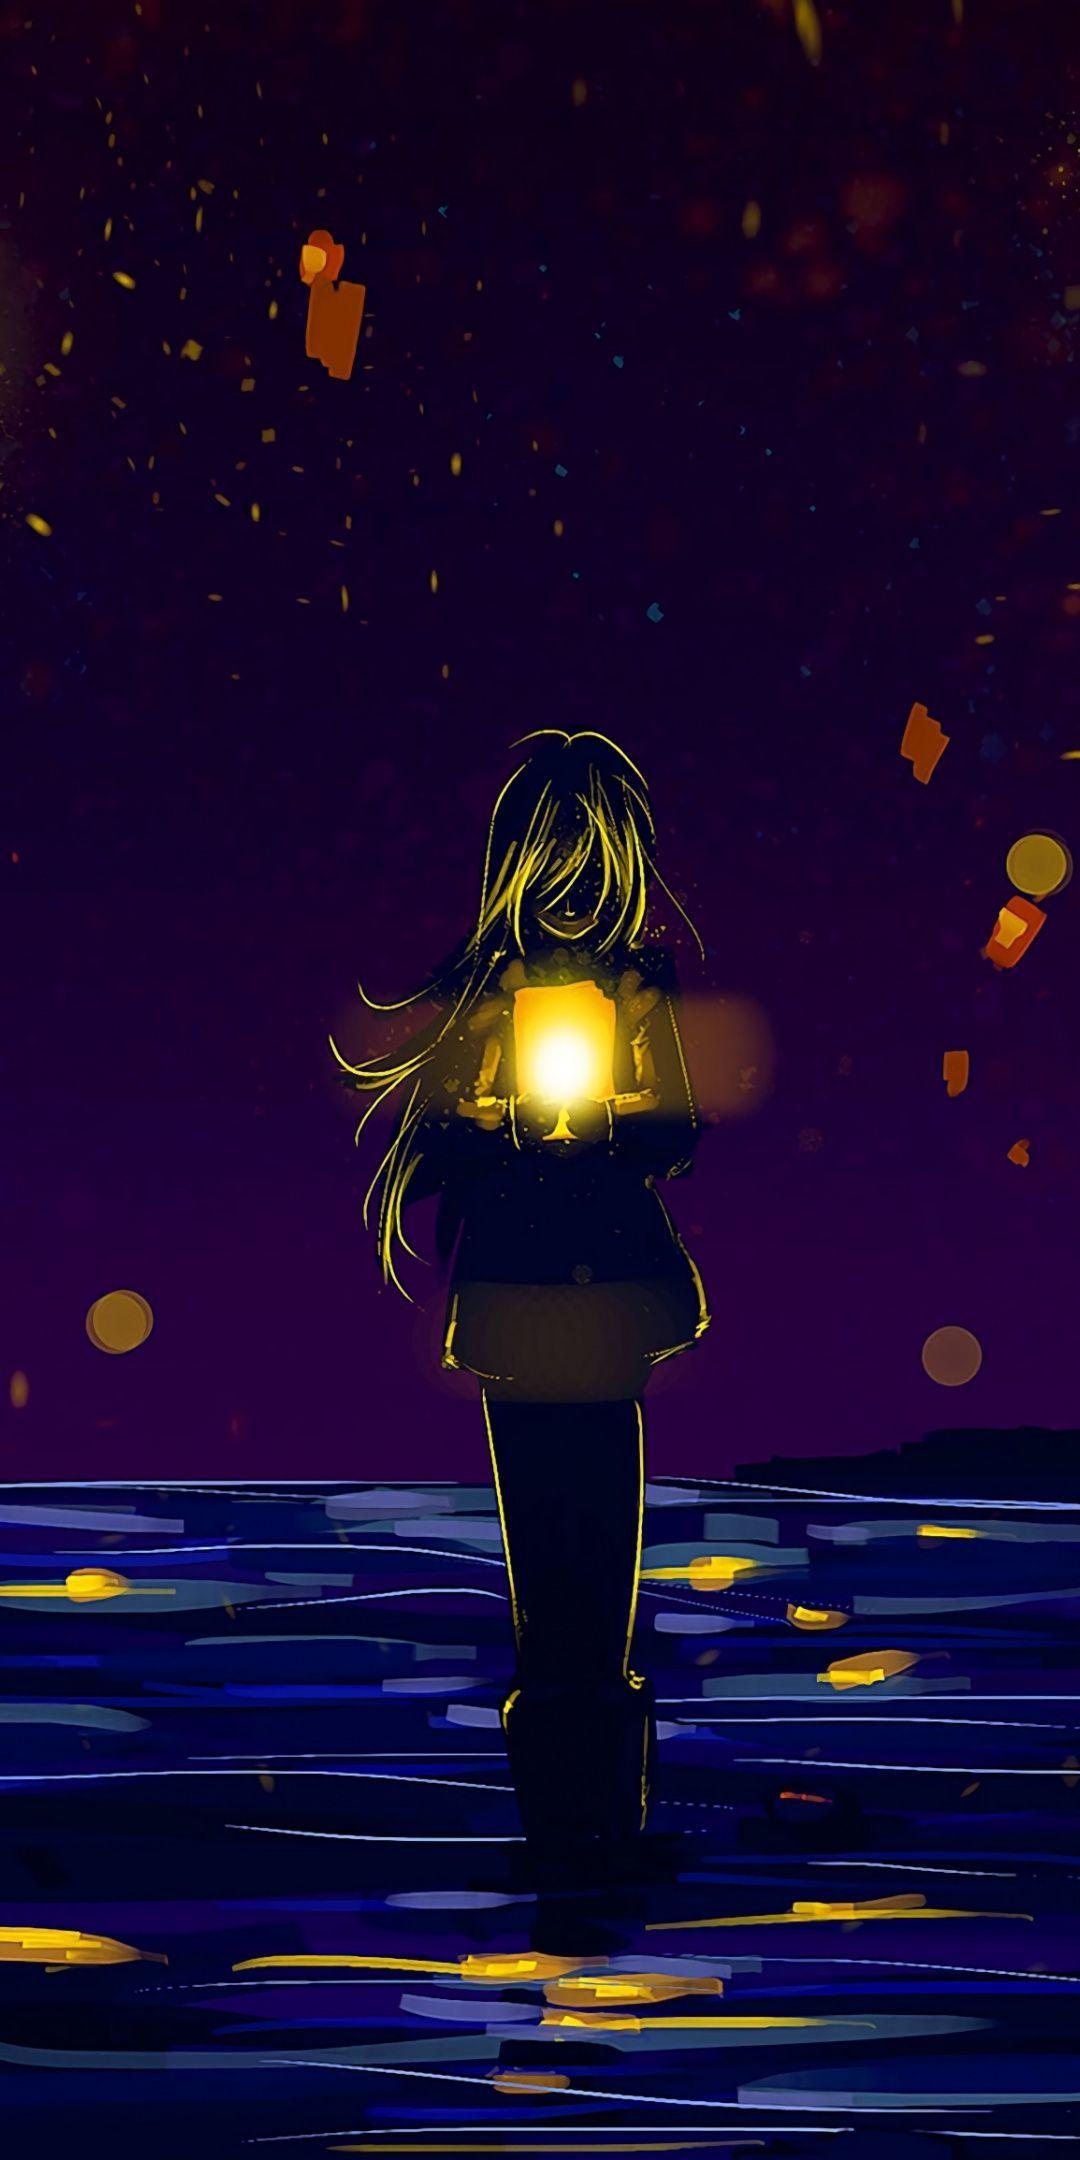 Wallpaper girl alone tears sad rain prayer anime hd picture image